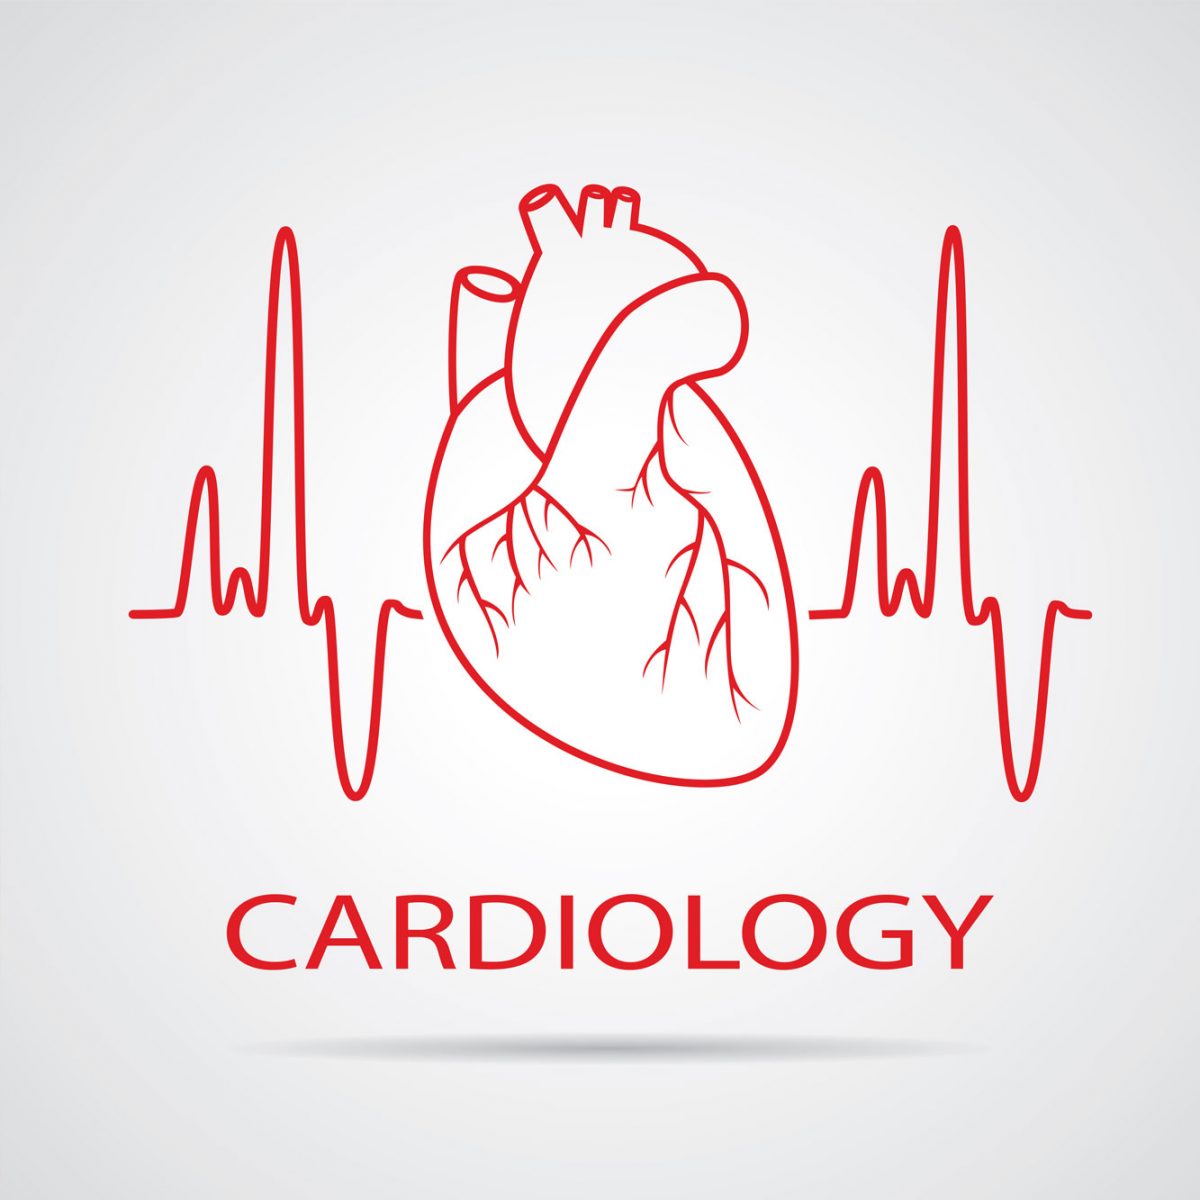 Salisbury Cardiology - Logo Design by BA Custom Logos on Dribbble